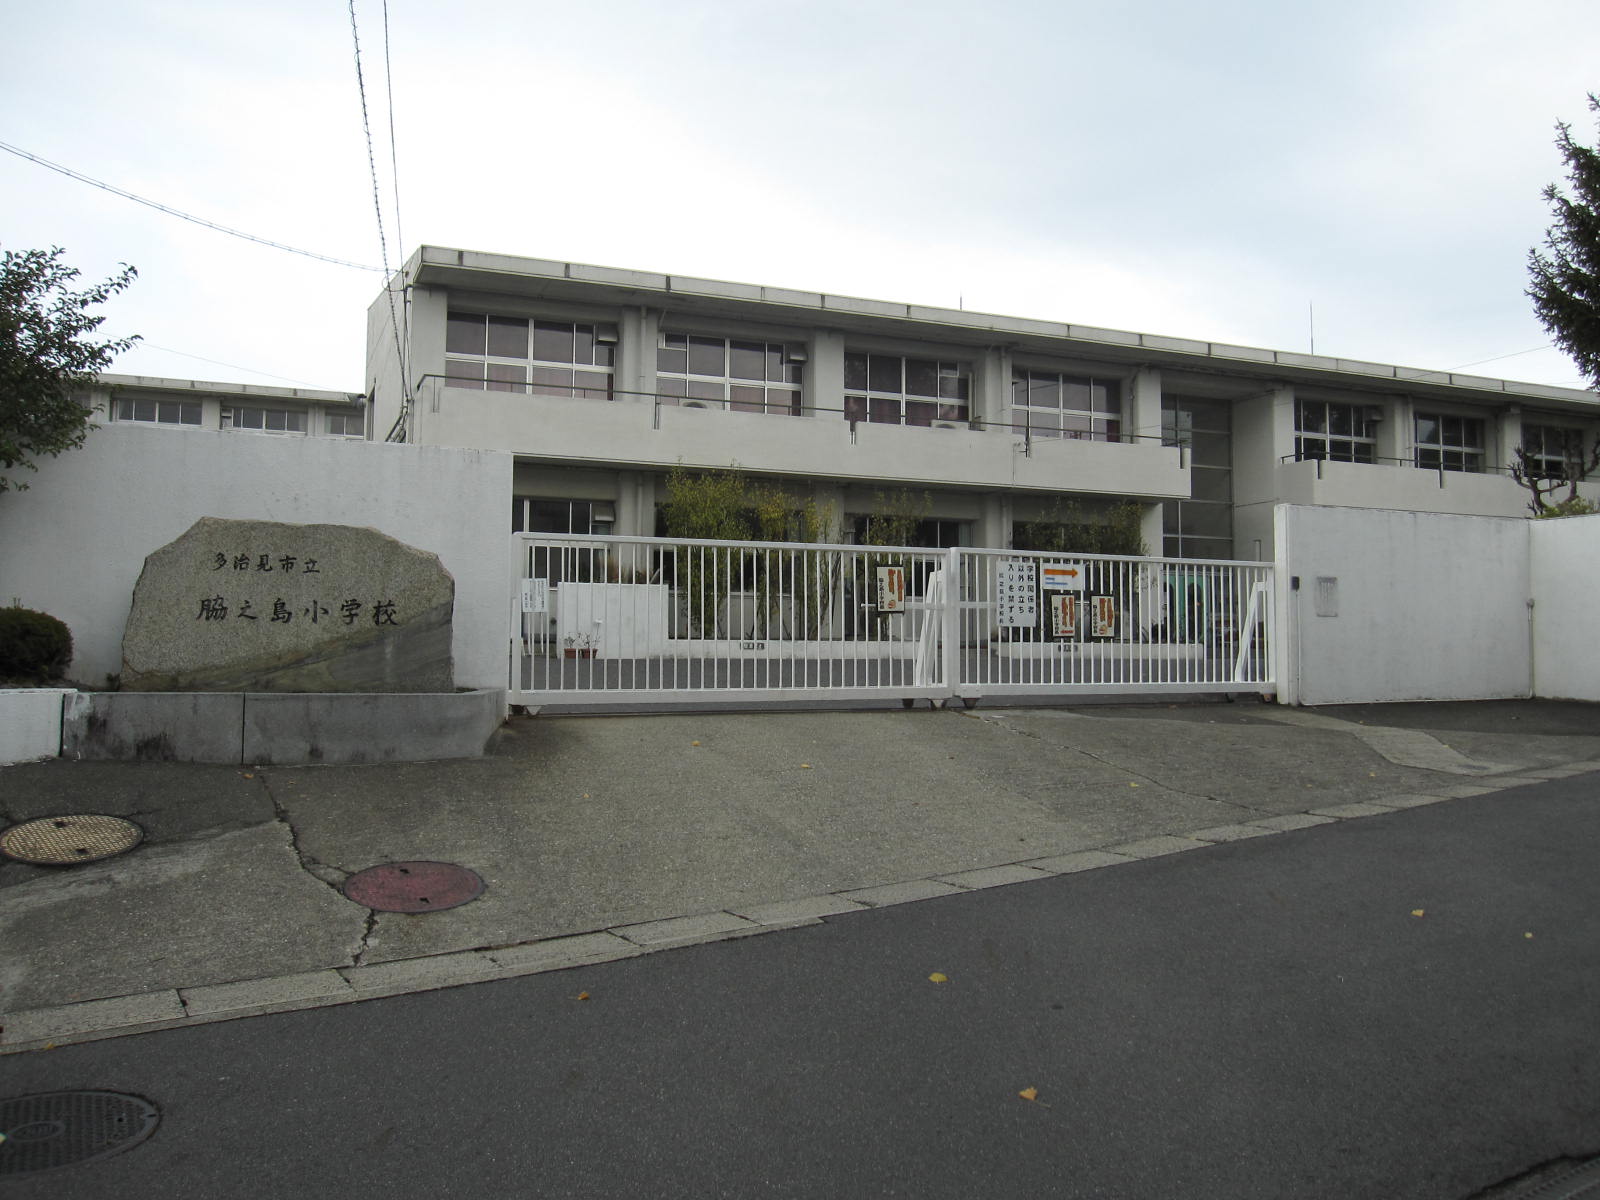 Primary school. 897m to Tajimi Municipal Wakinoshima elementary school (elementary school)